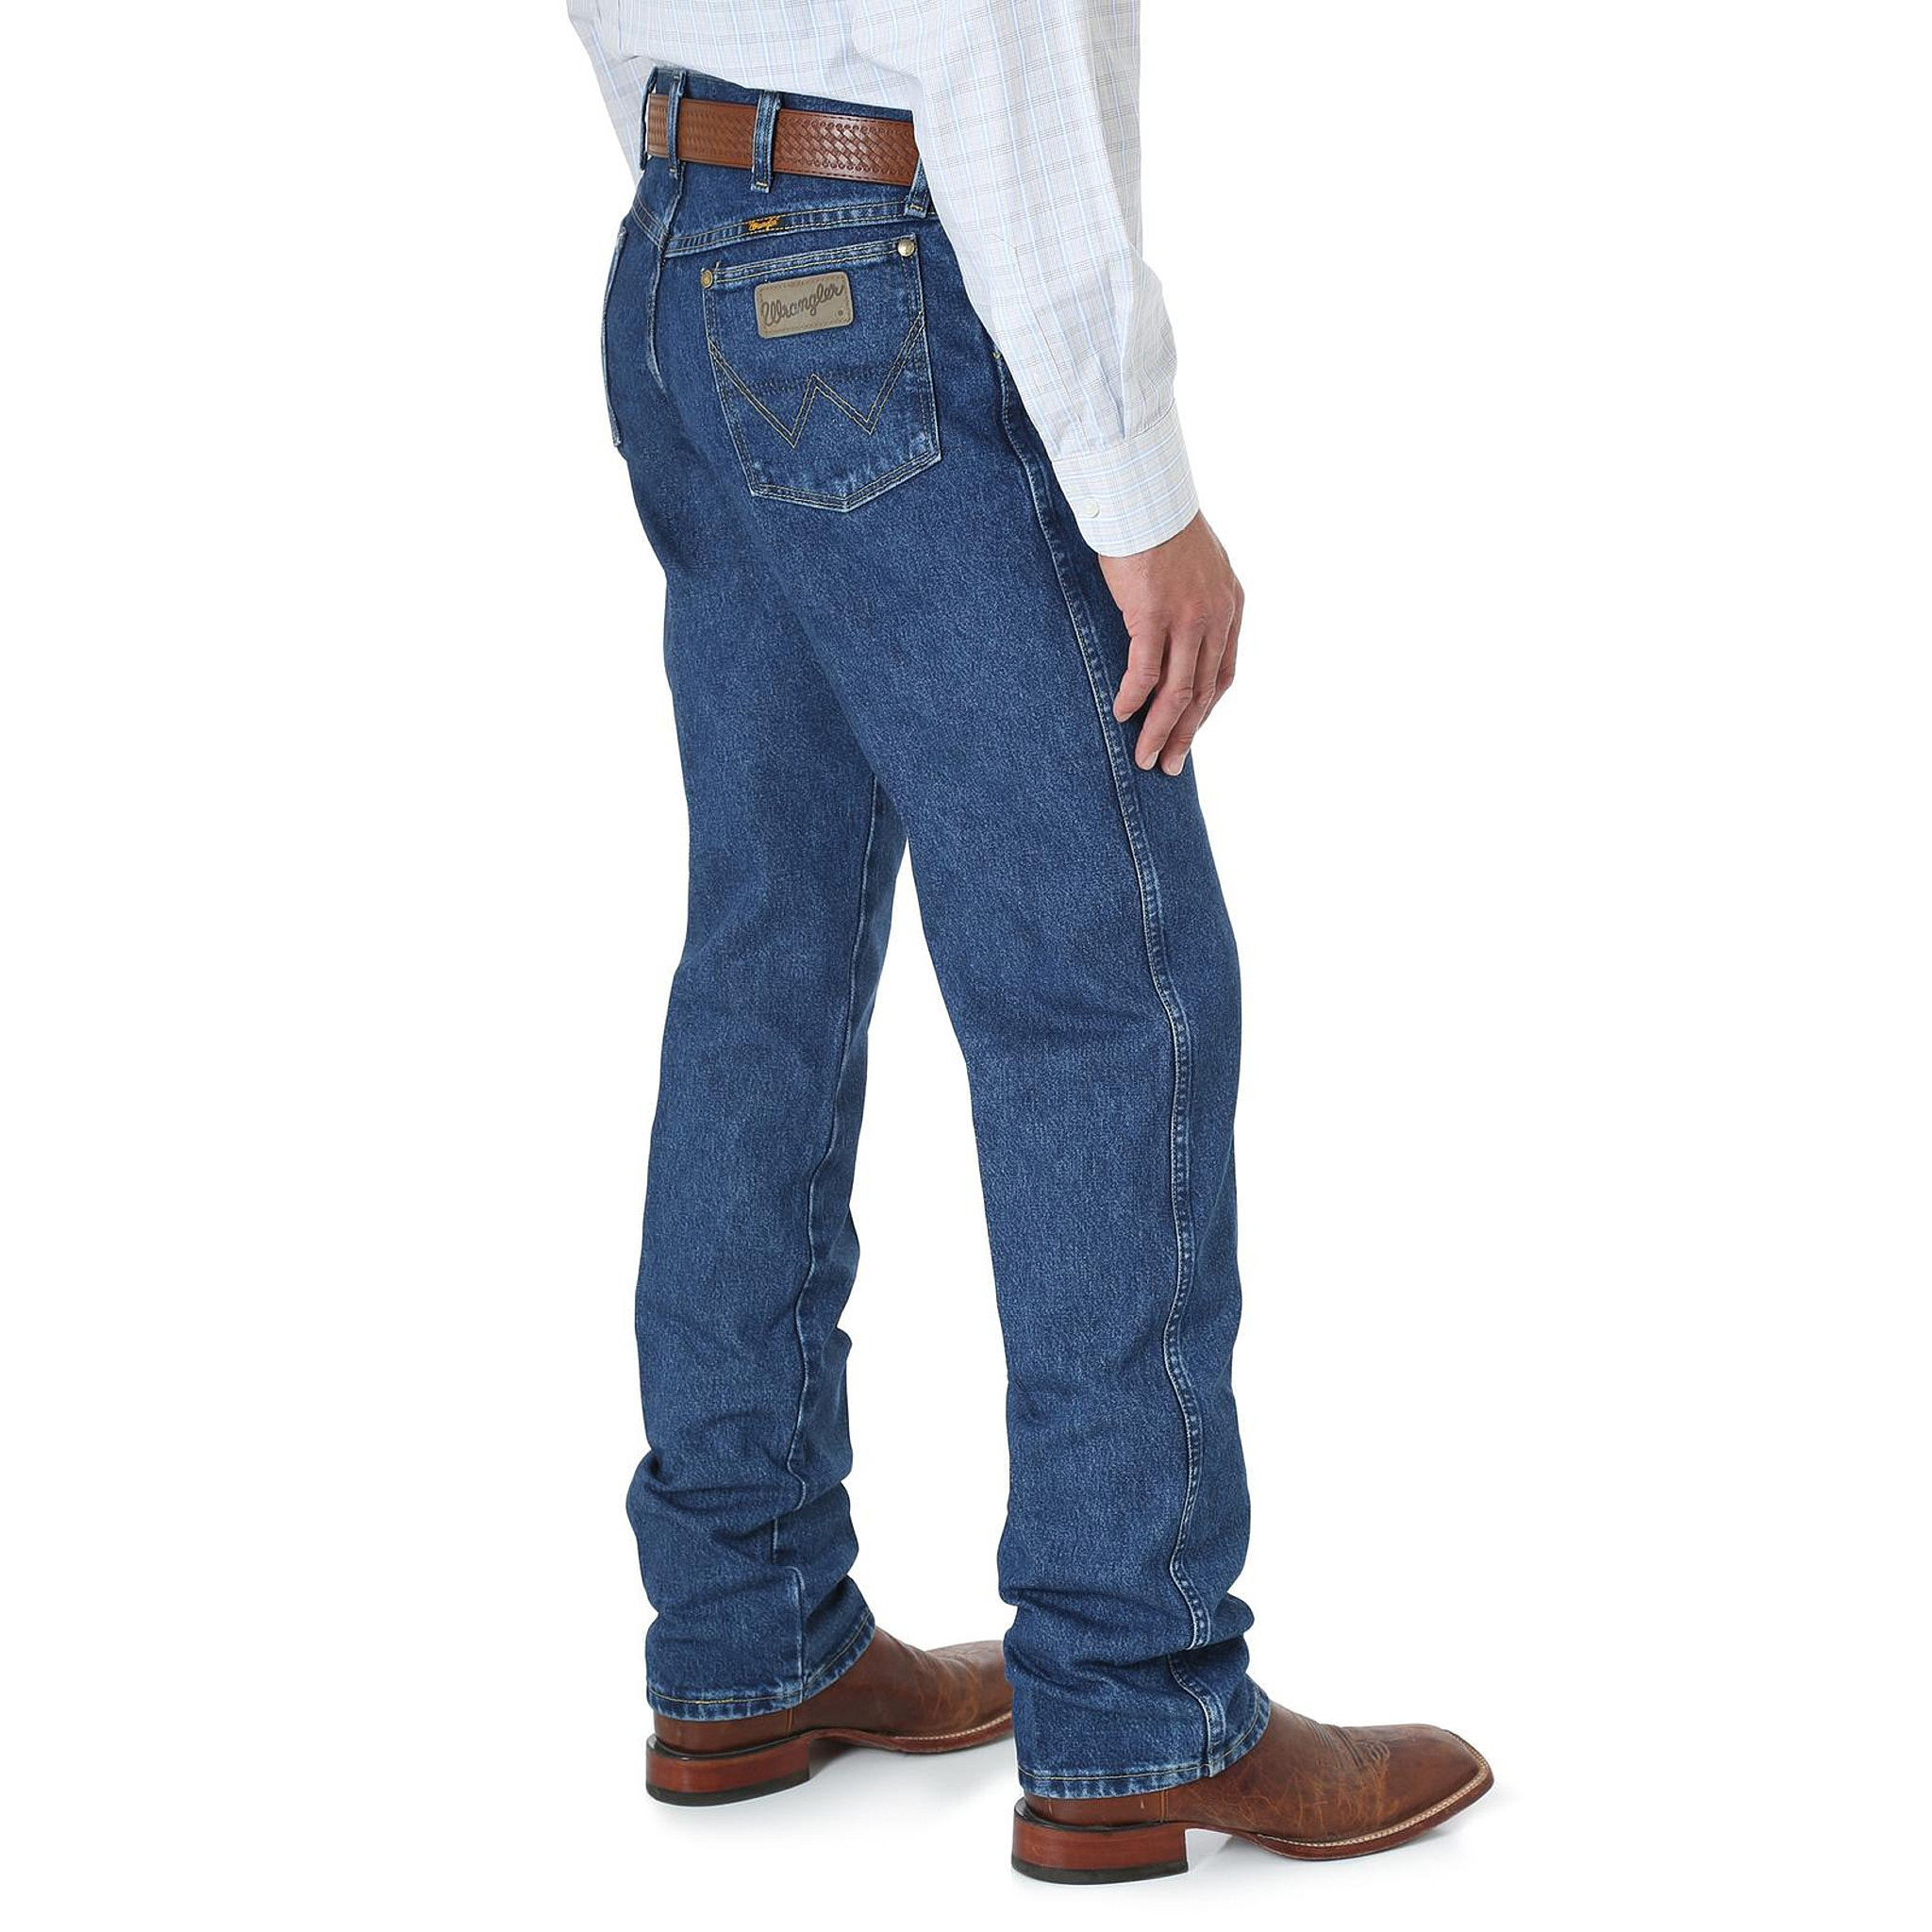 Wrangler George Strait Regular Fit - Mens Jeans  - 13Mgshd - image 2 of 4